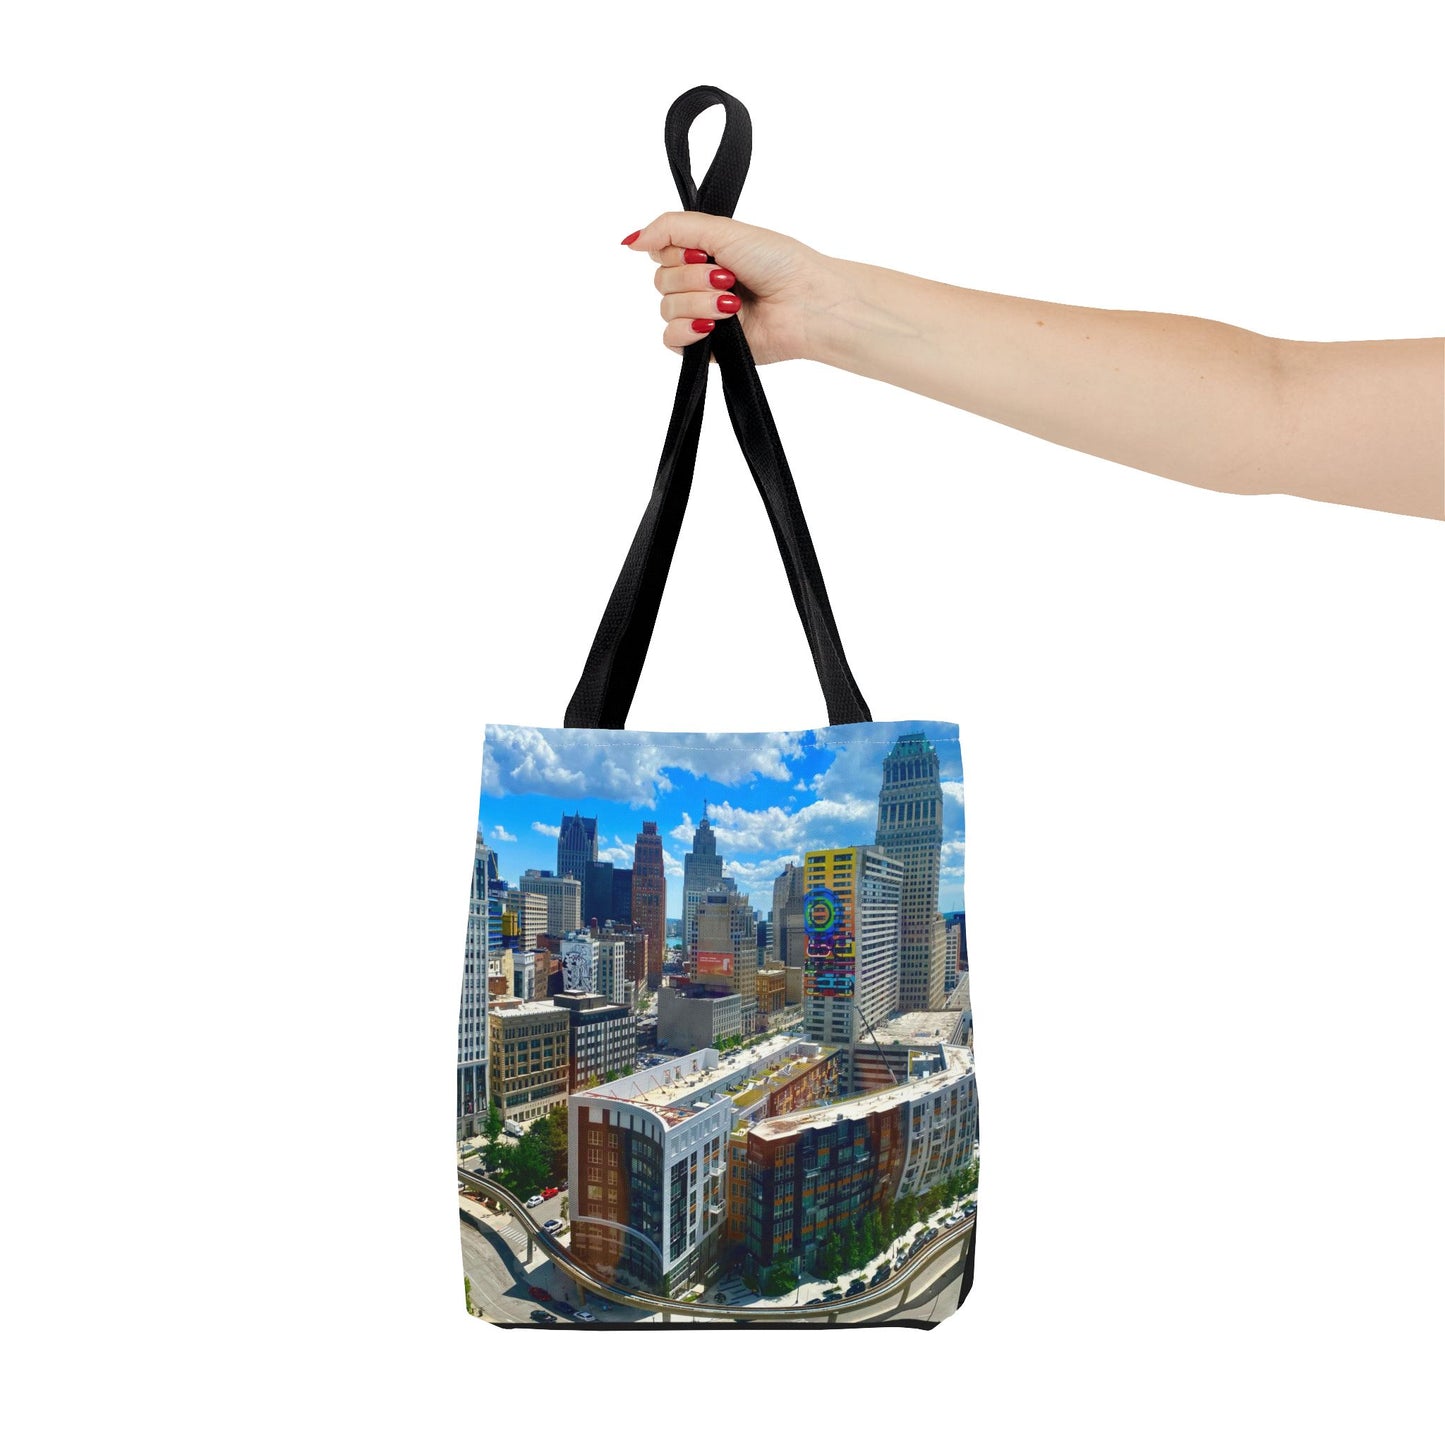 Downtown Detroit Tote Bag